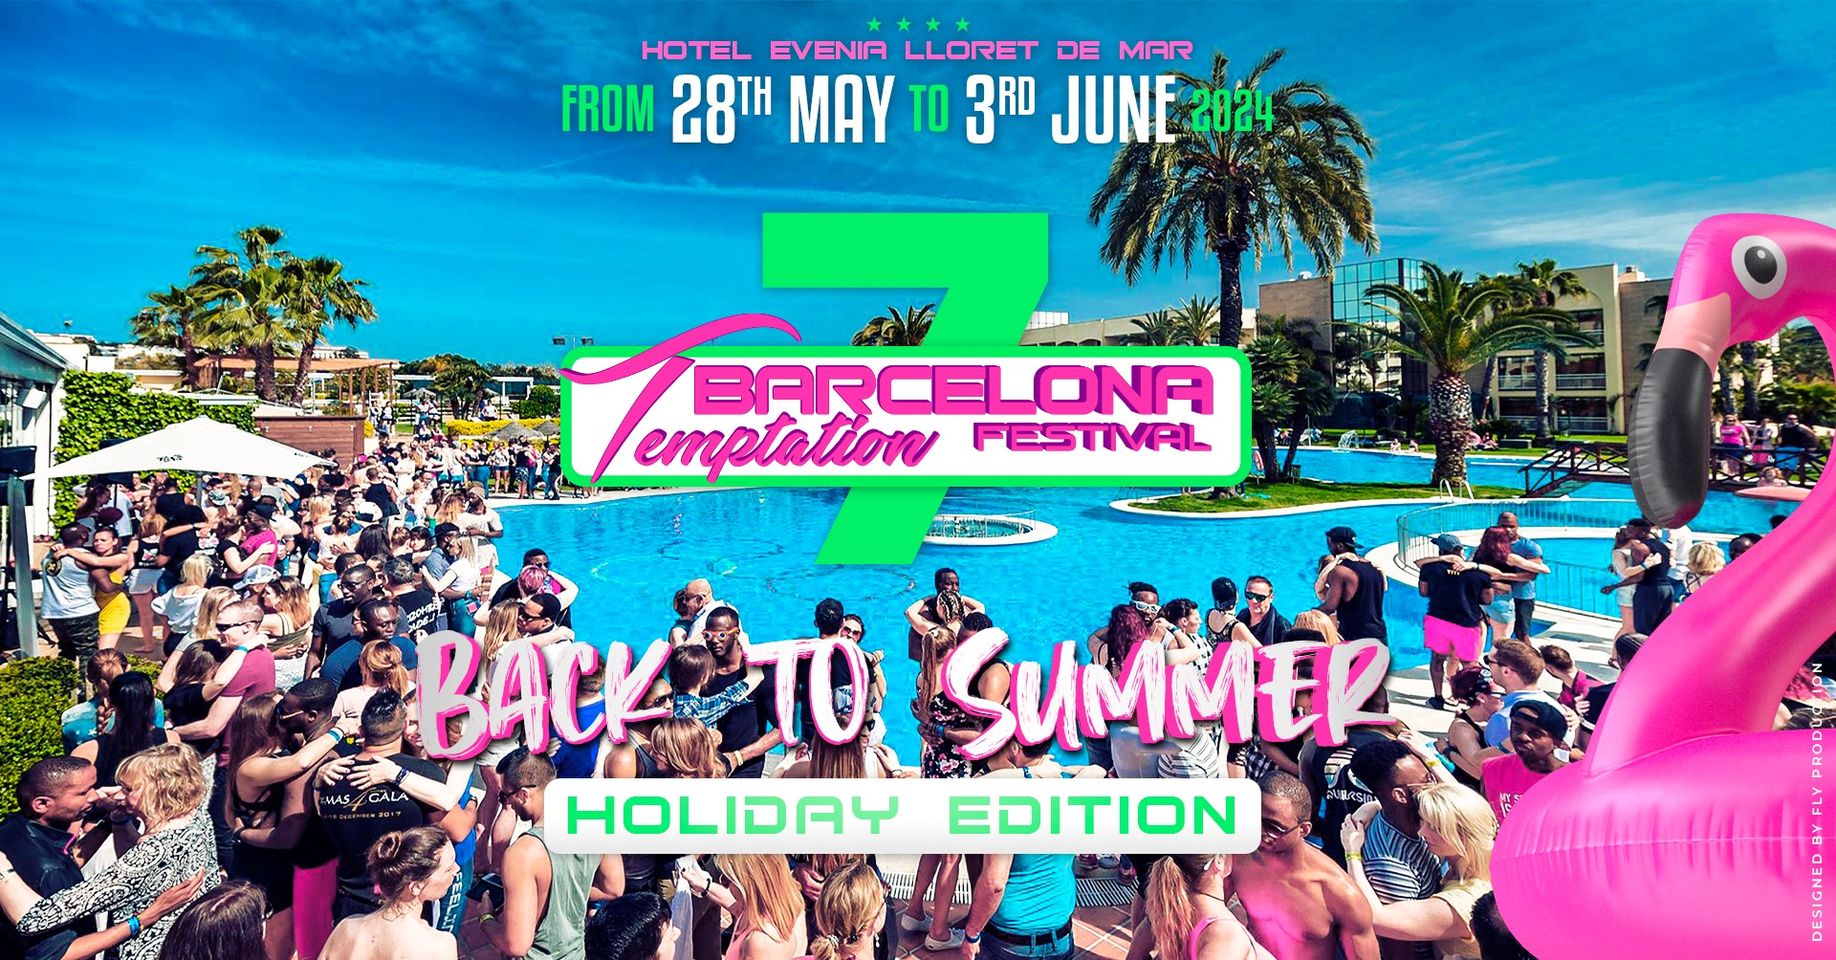 Barcelona Temptation Festival Back To summer Edition